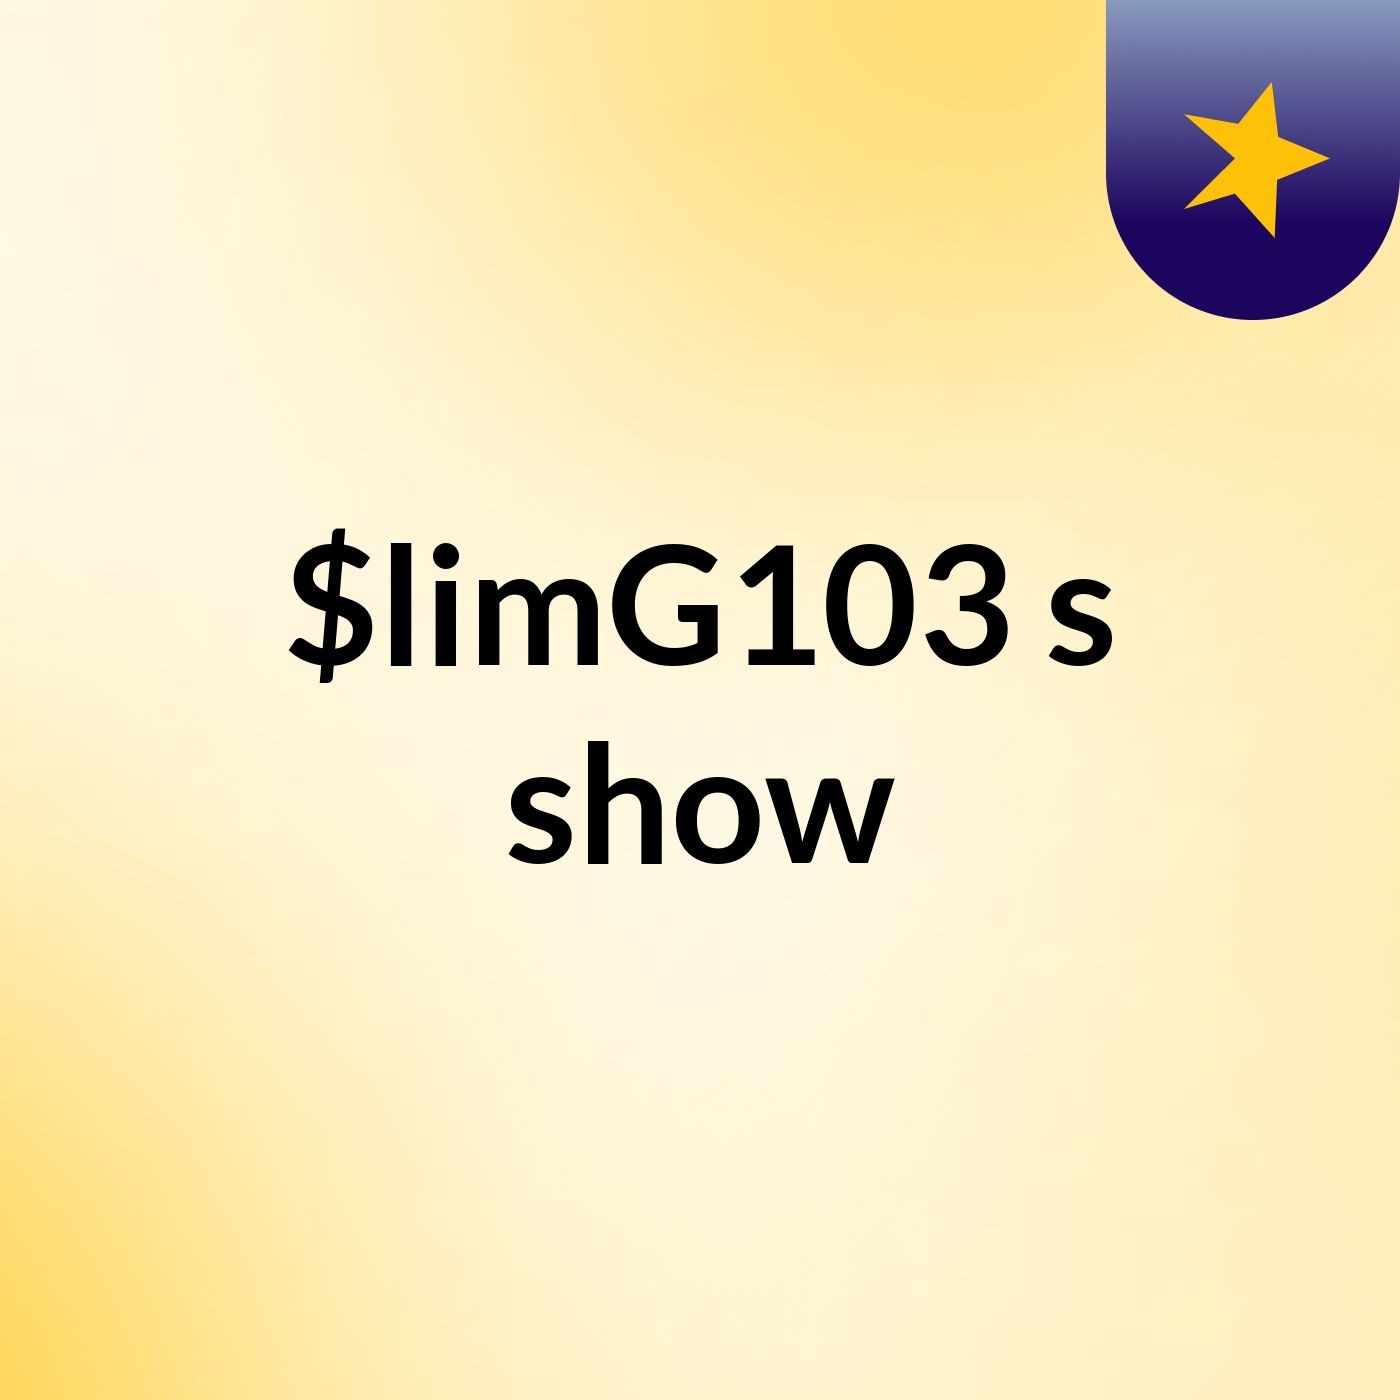 $limG103's show